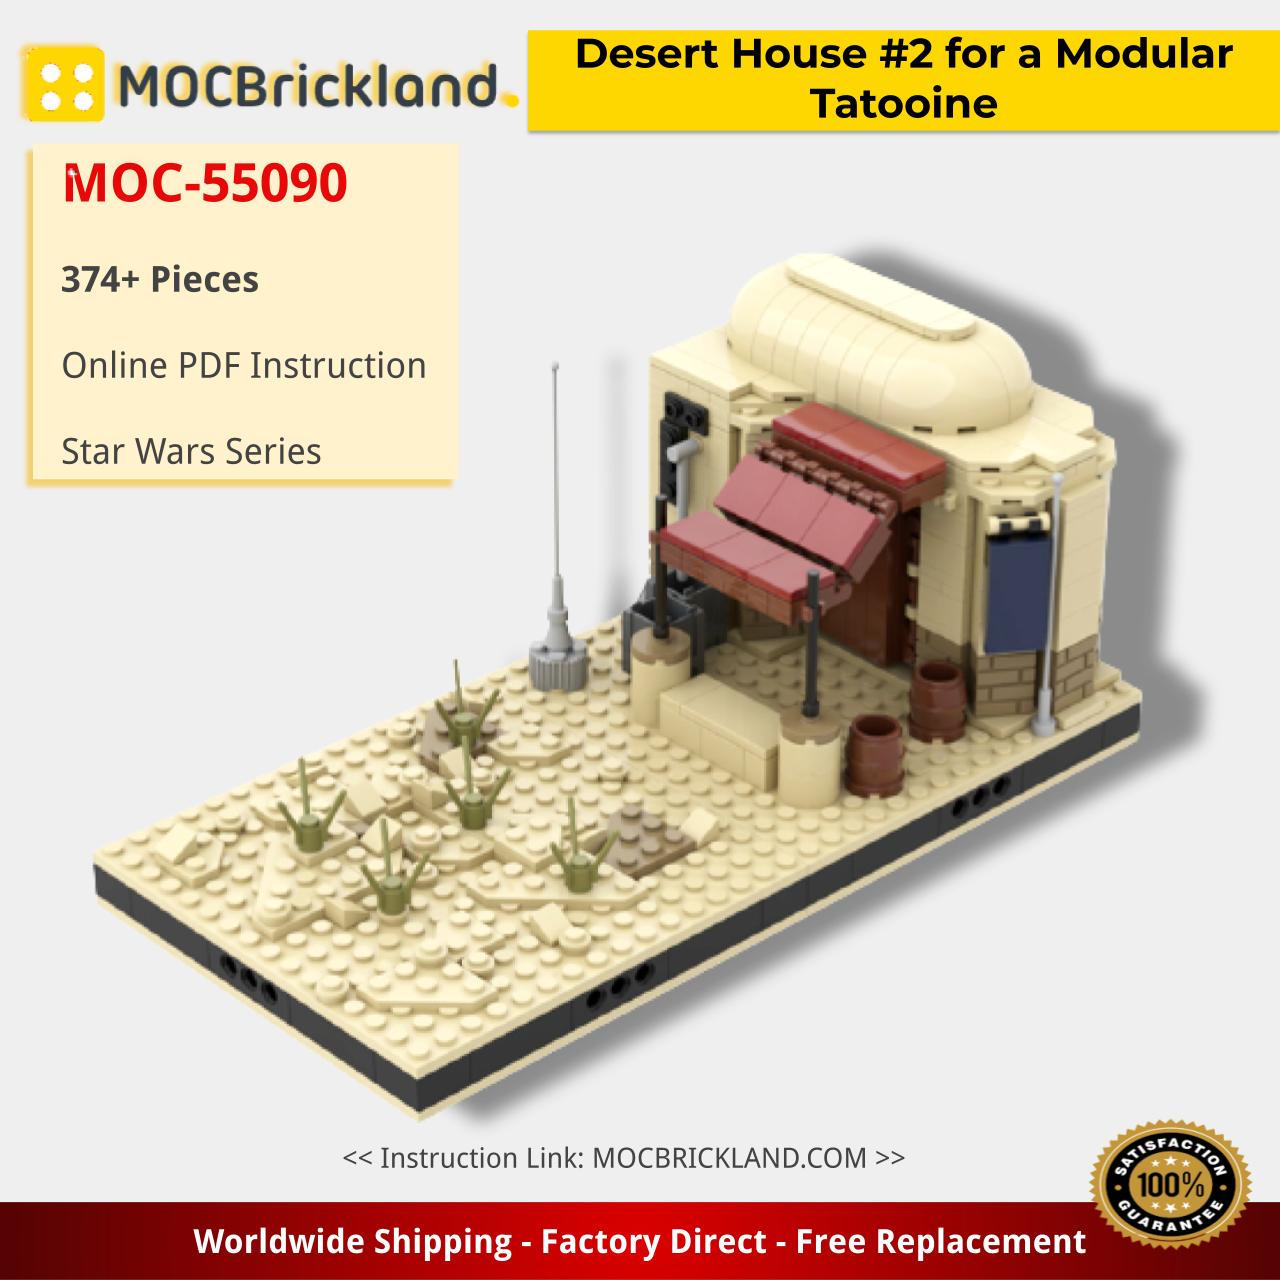 MOCBRICKLAND MOC-55090 Desert House #2 for a Modular Tatooine